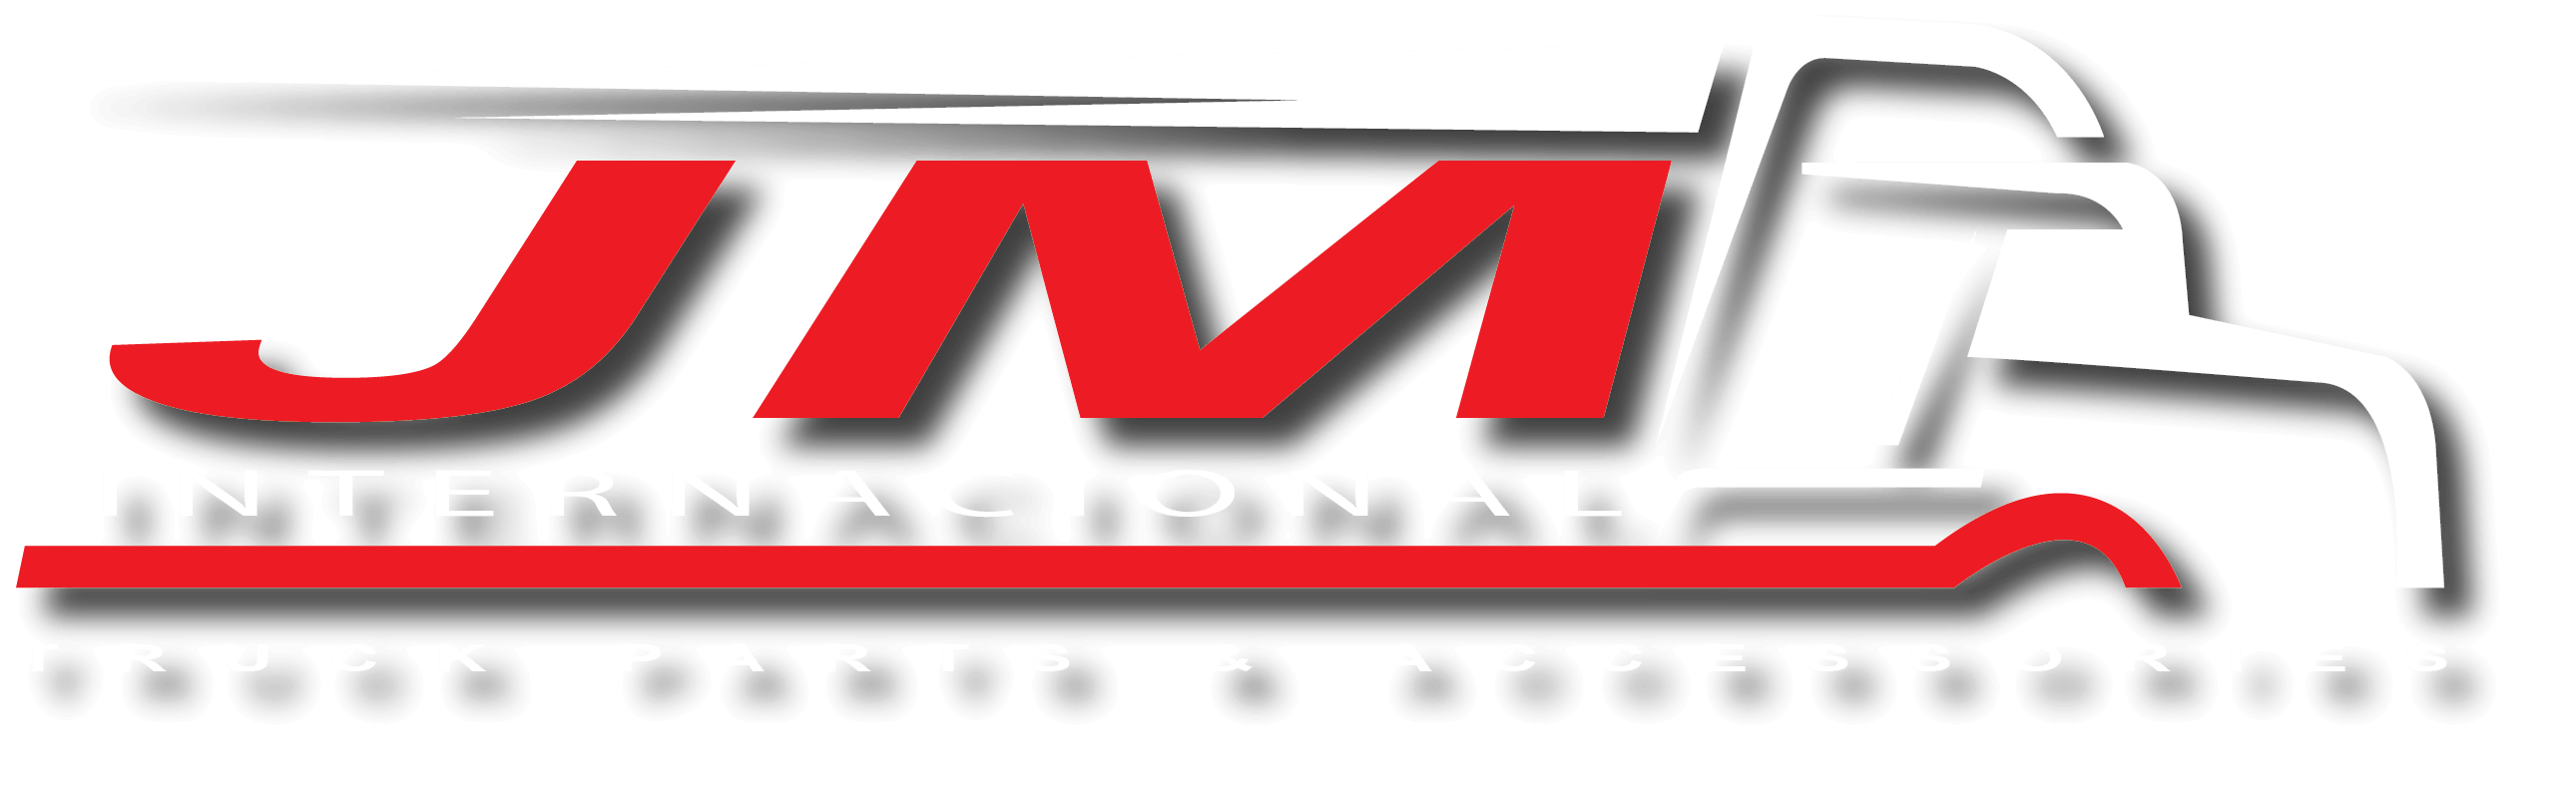 JM Internacional Logo